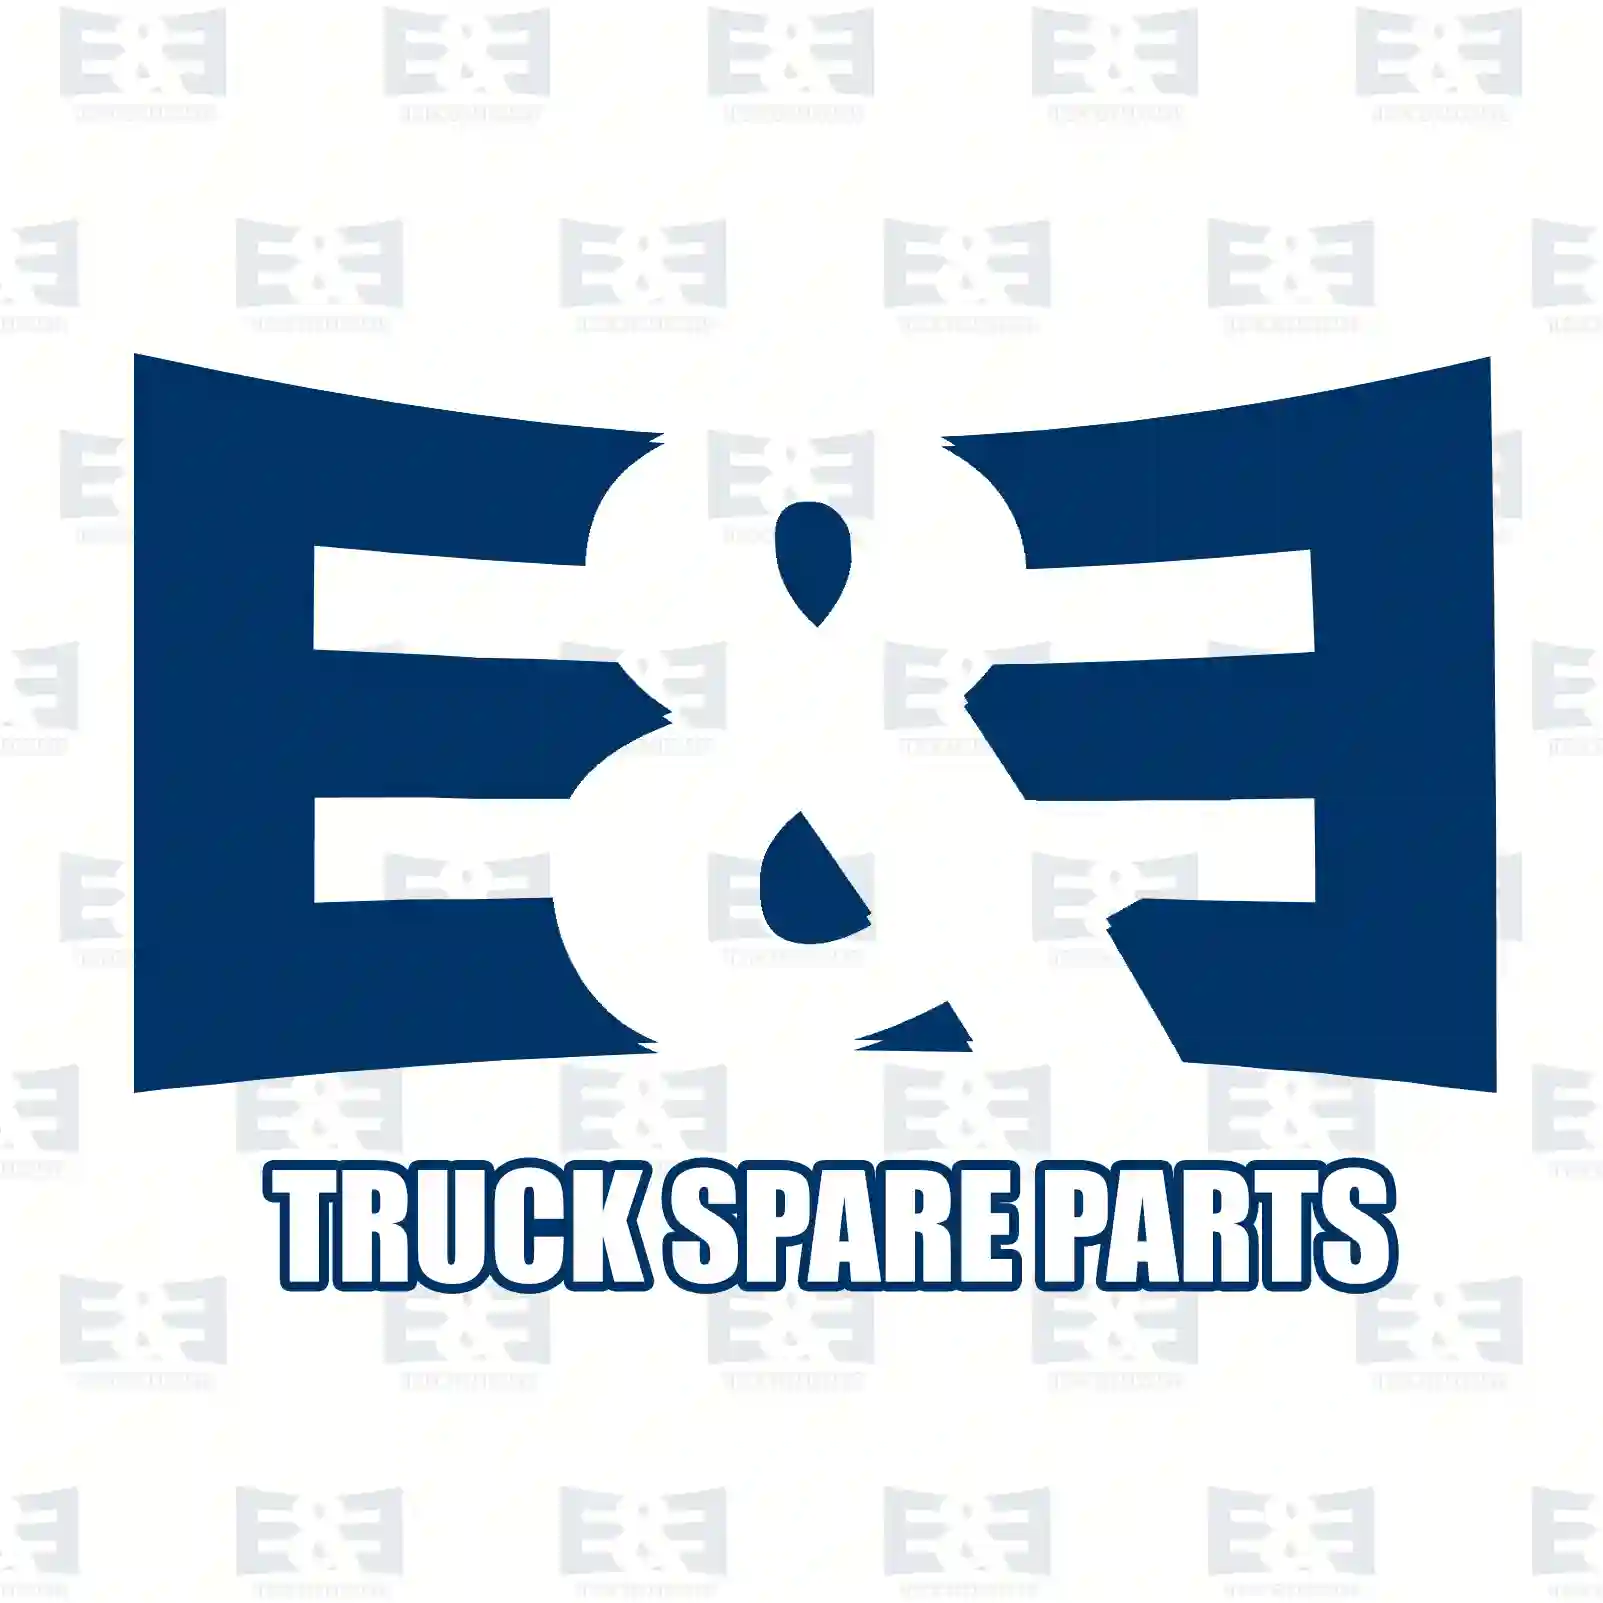 Shock absorber, 2E2283007, 0063232700, 6733230000, 6733230600, ZG41607-0008, , ||  2E2283007 E&E Truck Spare Parts | Truck Spare Parts, Auotomotive Spare Parts Shock absorber, 2E2283007, 0063232700, 6733230000, 6733230600, ZG41607-0008, , ||  2E2283007 E&E Truck Spare Parts | Truck Spare Parts, Auotomotive Spare Parts